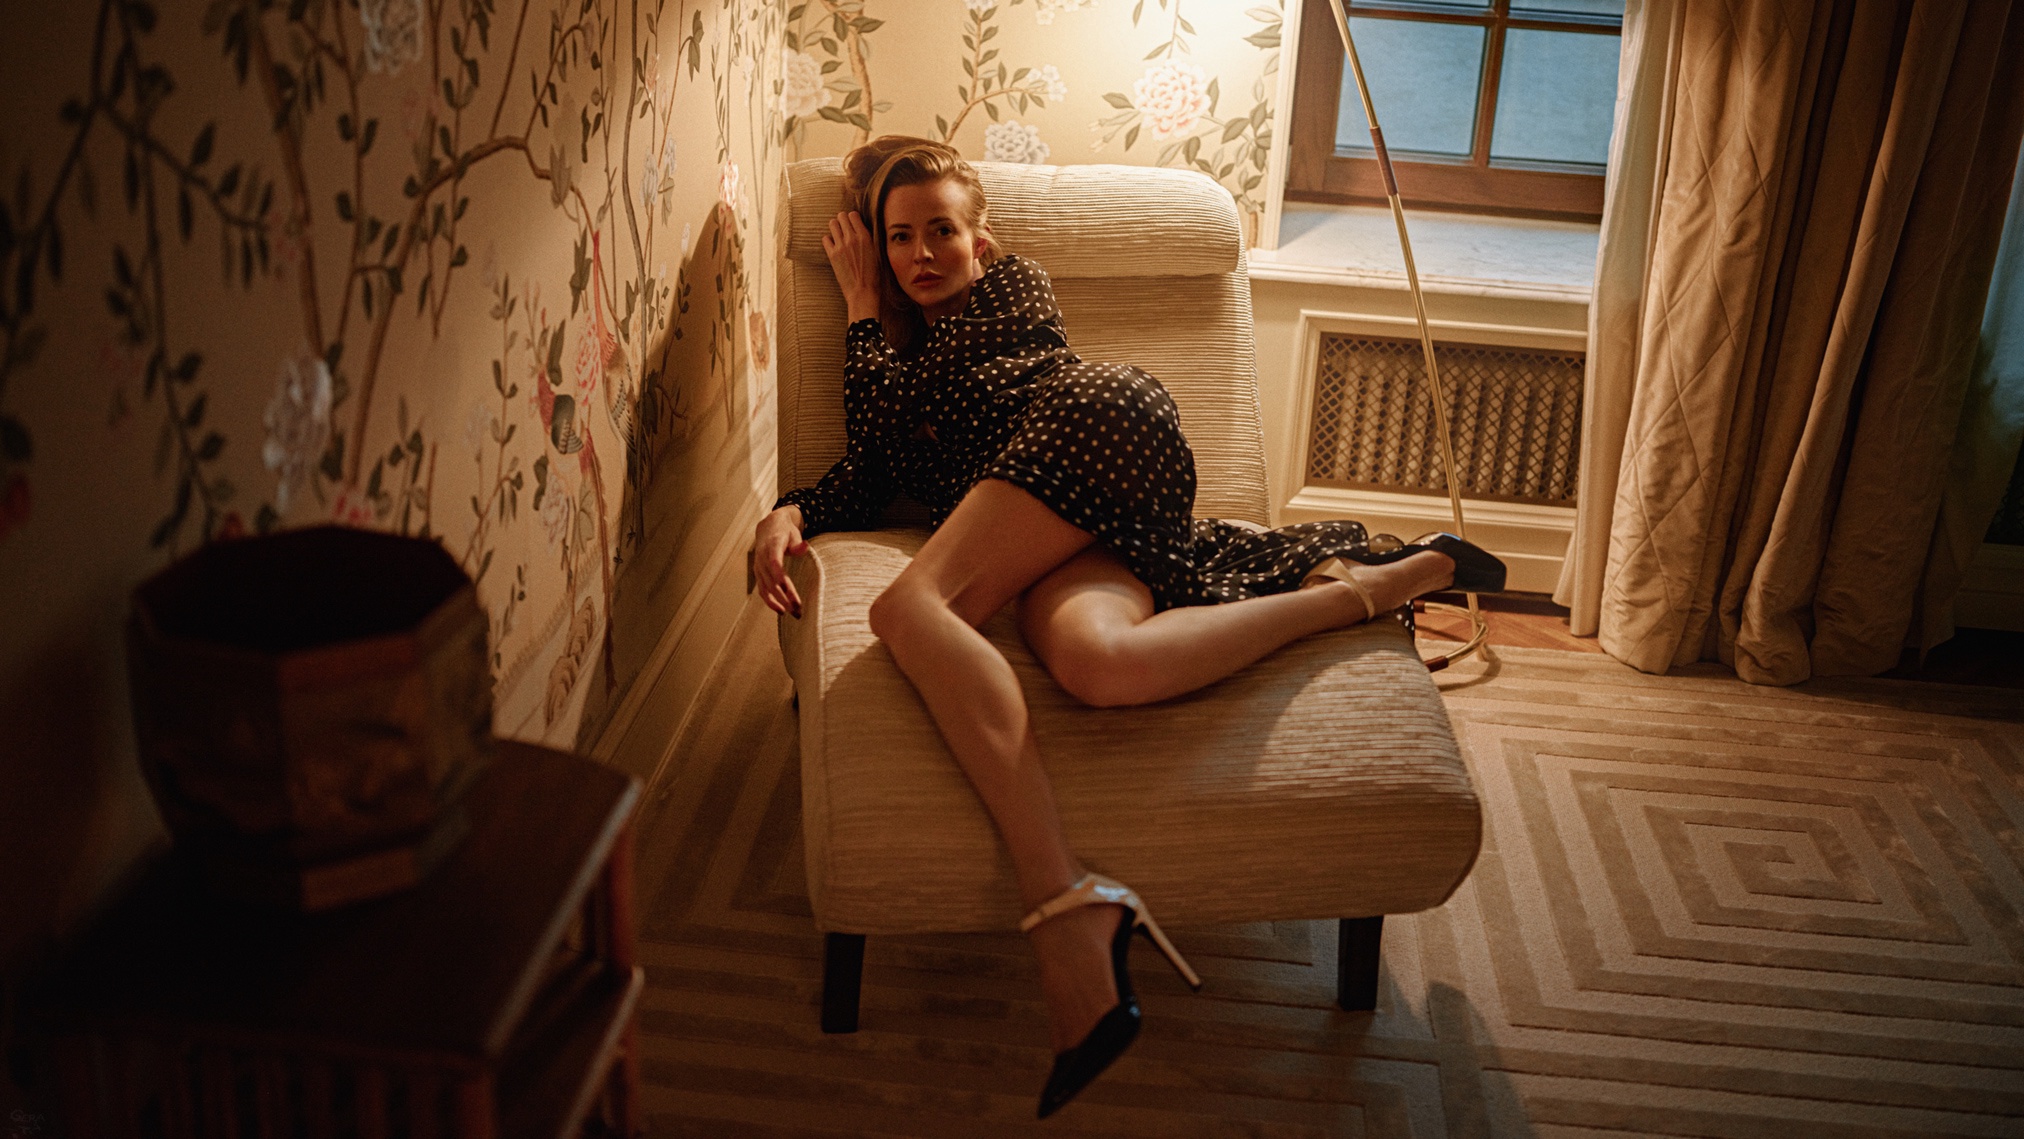 Women Natalia Emelianenko Brunette Dress Black Clothing Dots Legs High Heels Relaxing Warm Light 2024x1139